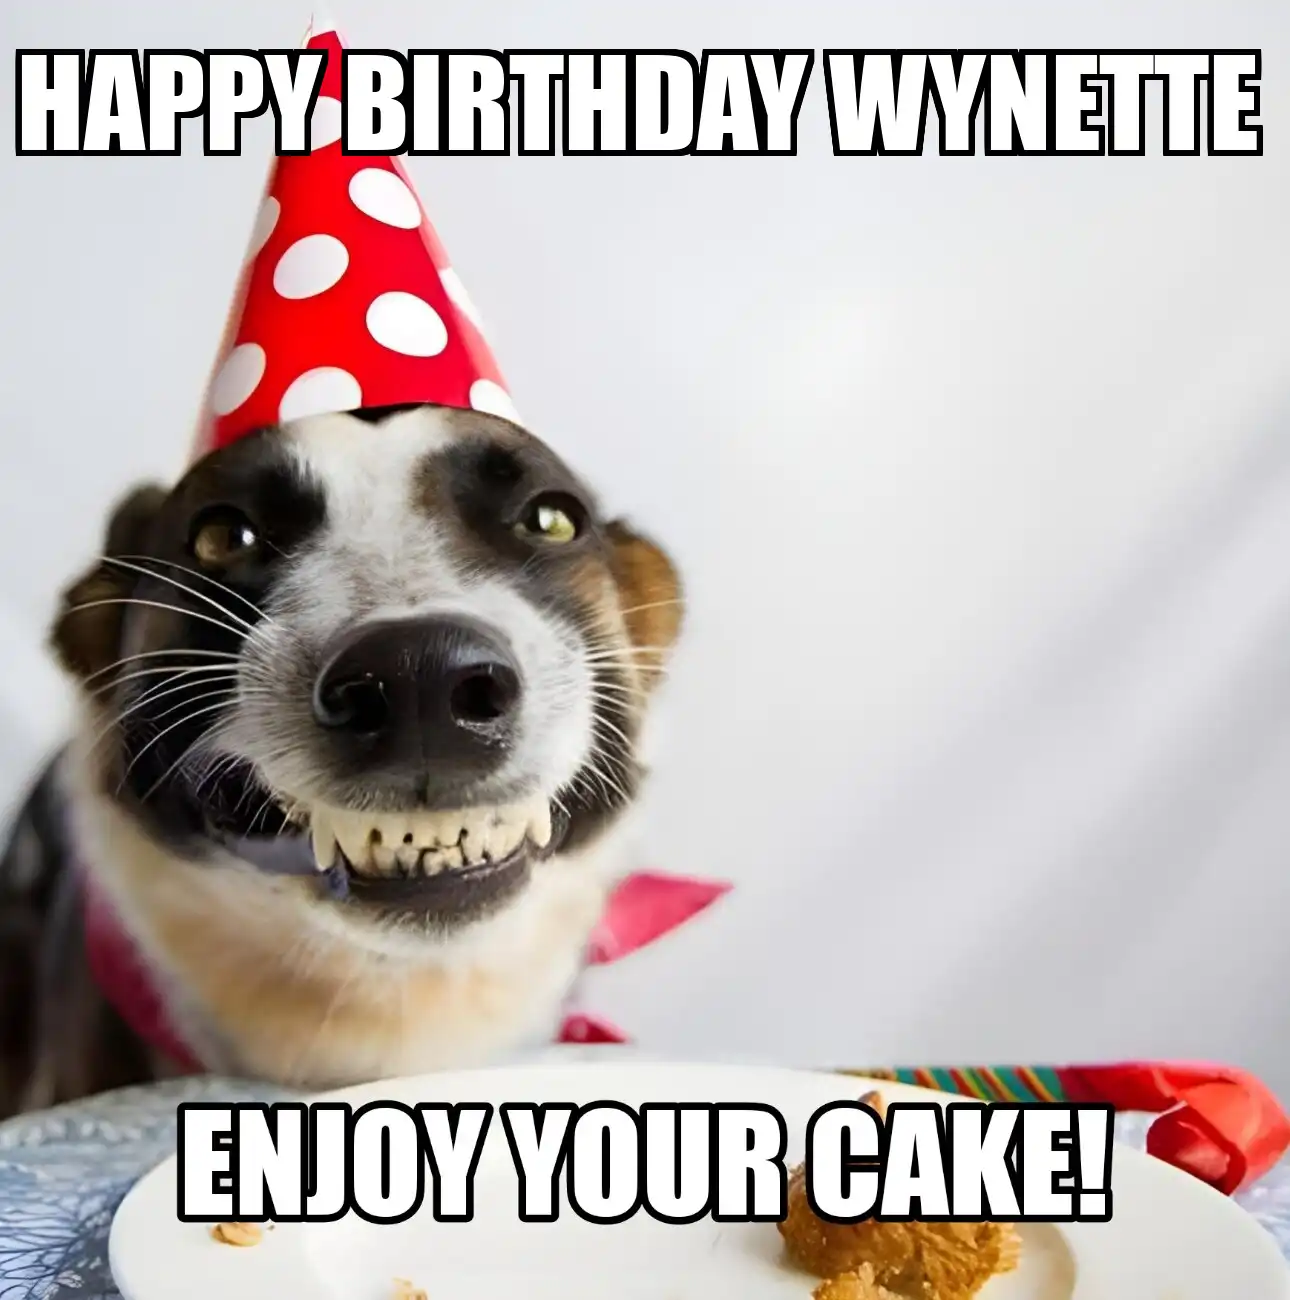 Happy Birthday Wynette Enjoy Your Cake Dog Meme